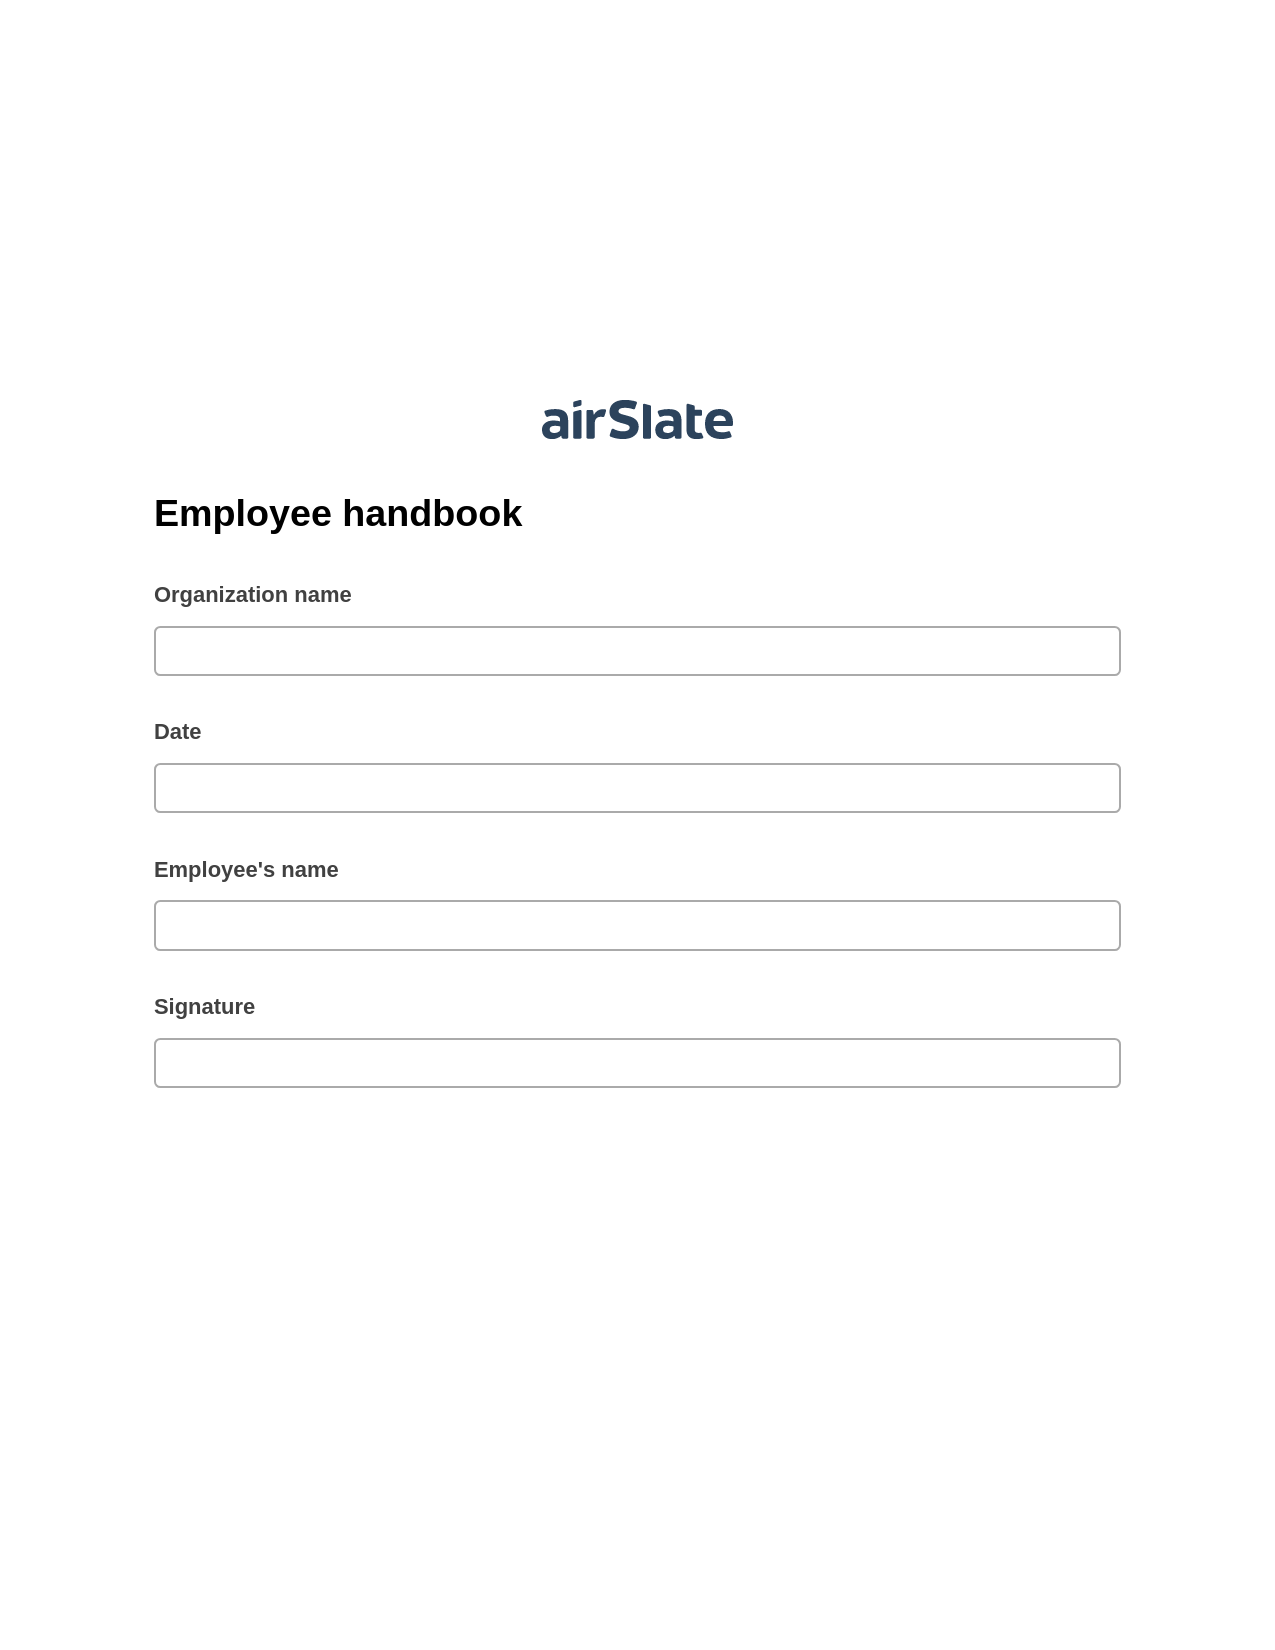 Employee handbook Pre-fill from CSV File Bot, Slack Notification Bot, Export to Smartsheet